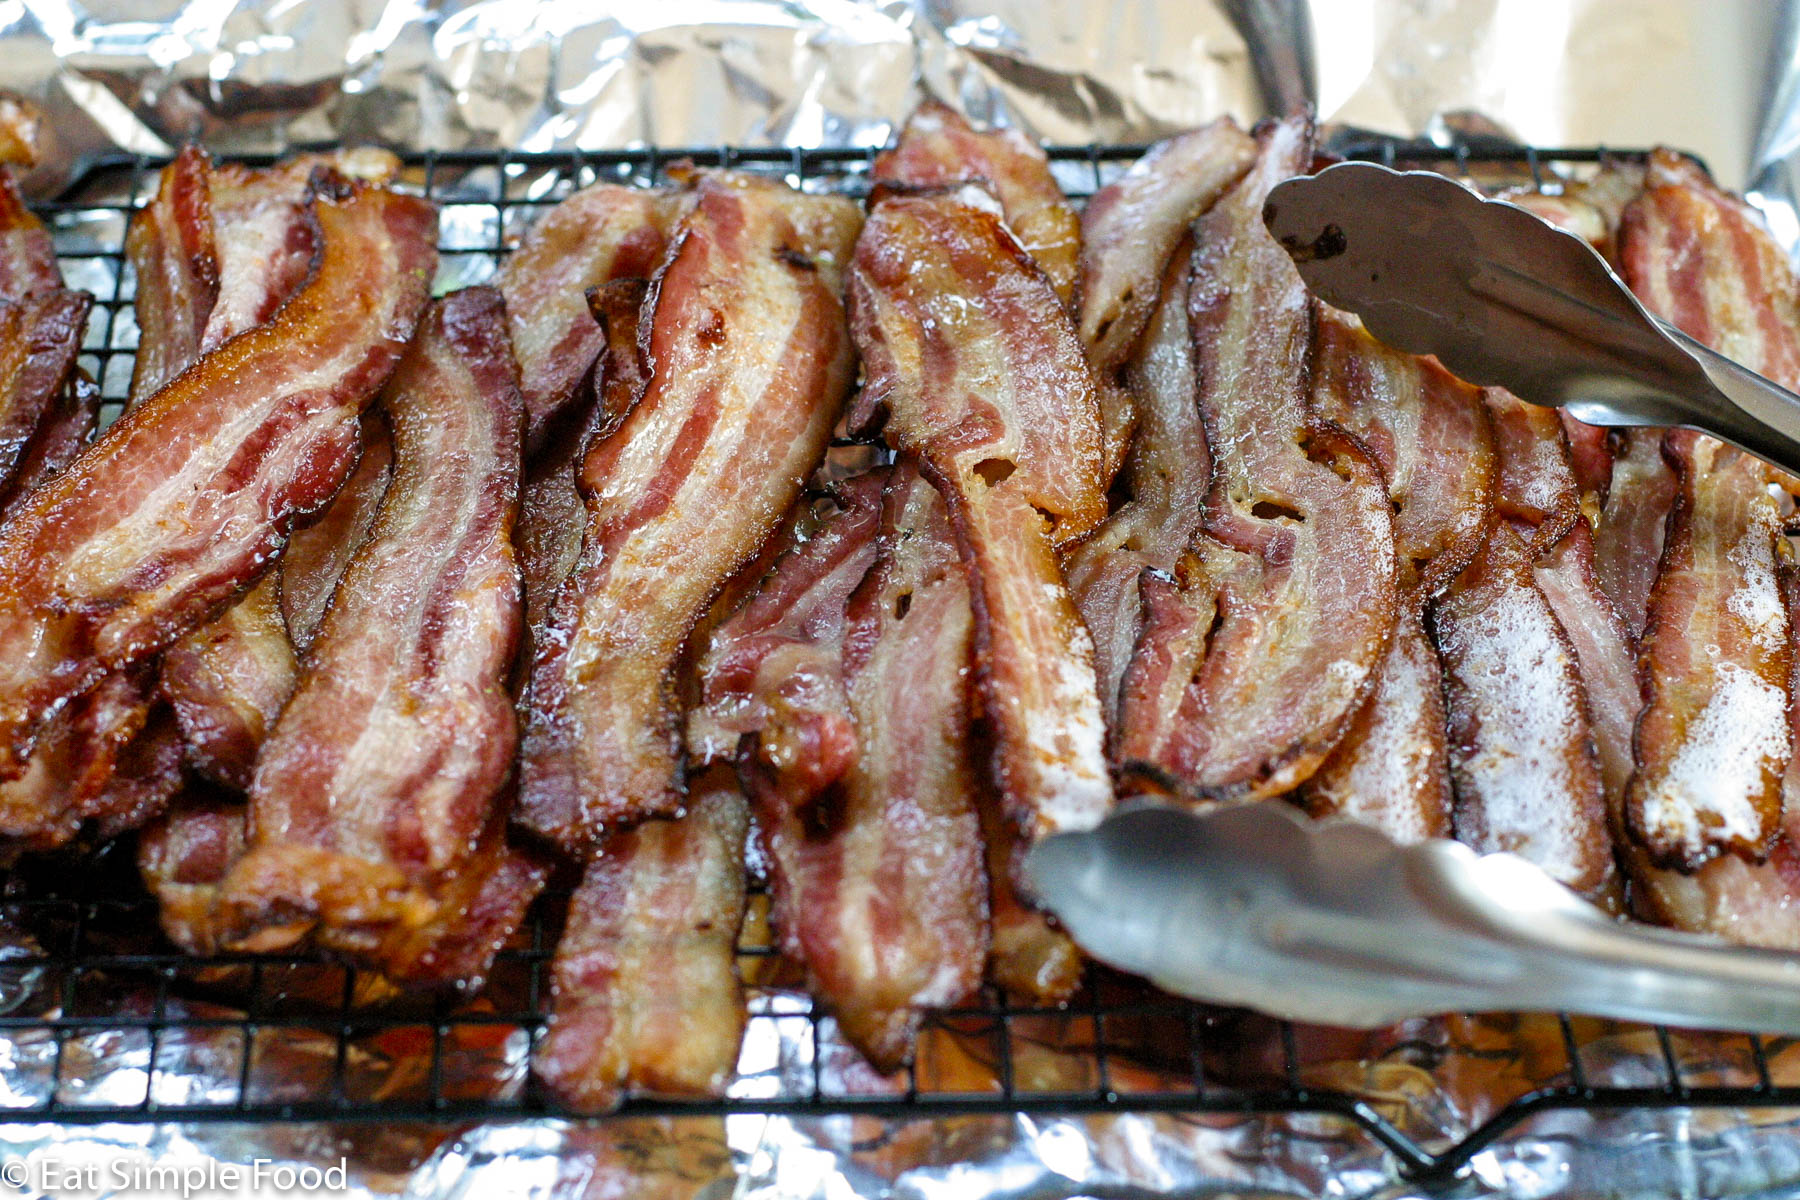 https://eatsimplefood.com/wp-content/uploads/2020/06/Bacon-Side-View-1800-EatSimpleFood.com_.jpg